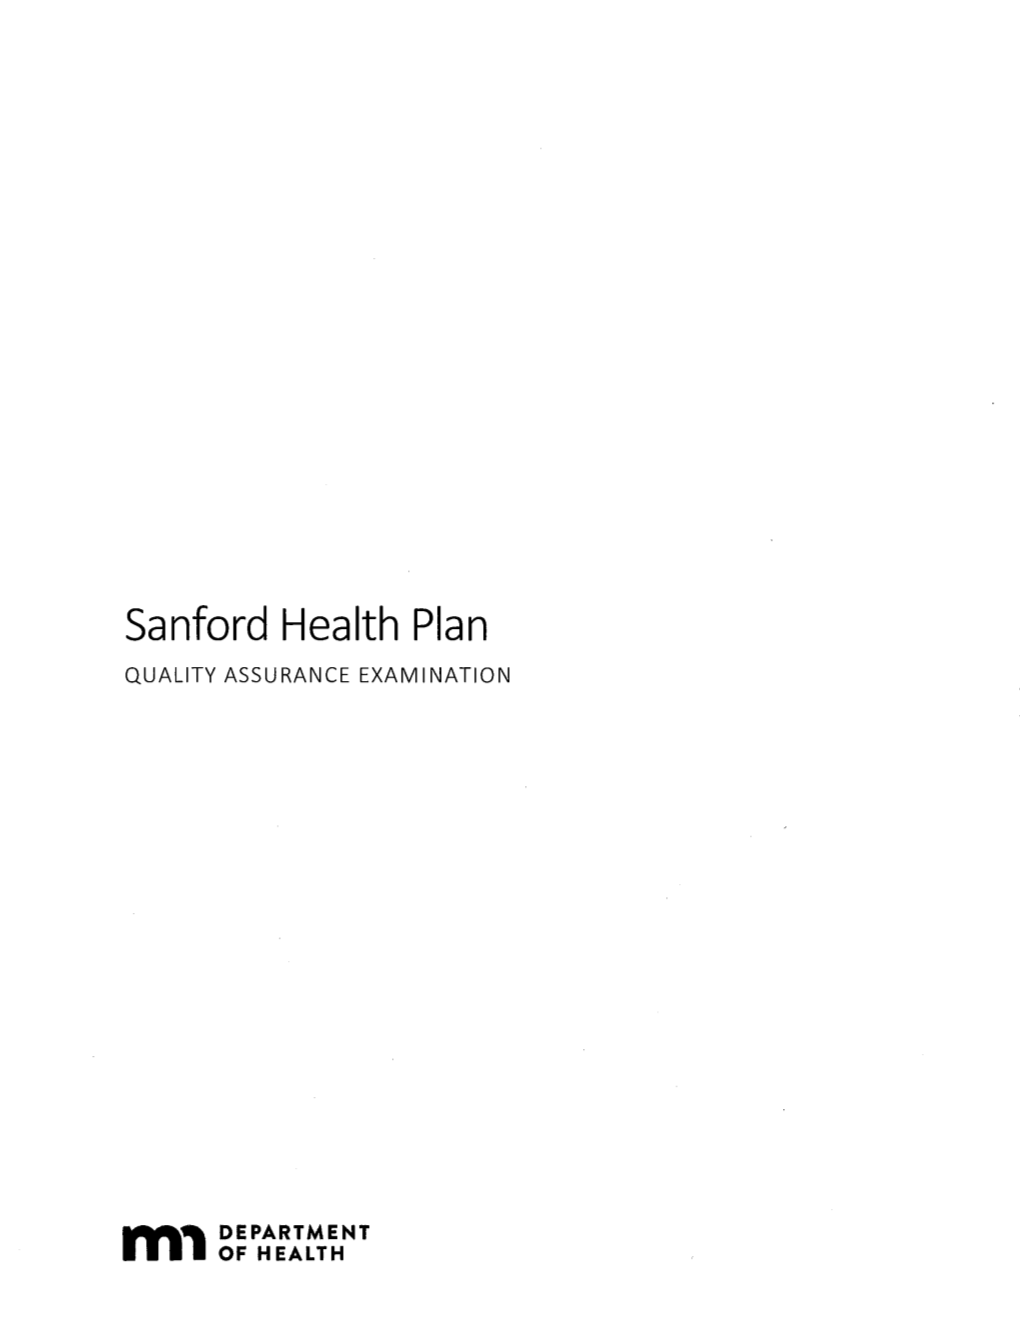 Sanford Health Plan QUALITY ASSURANCE EXAMINATION